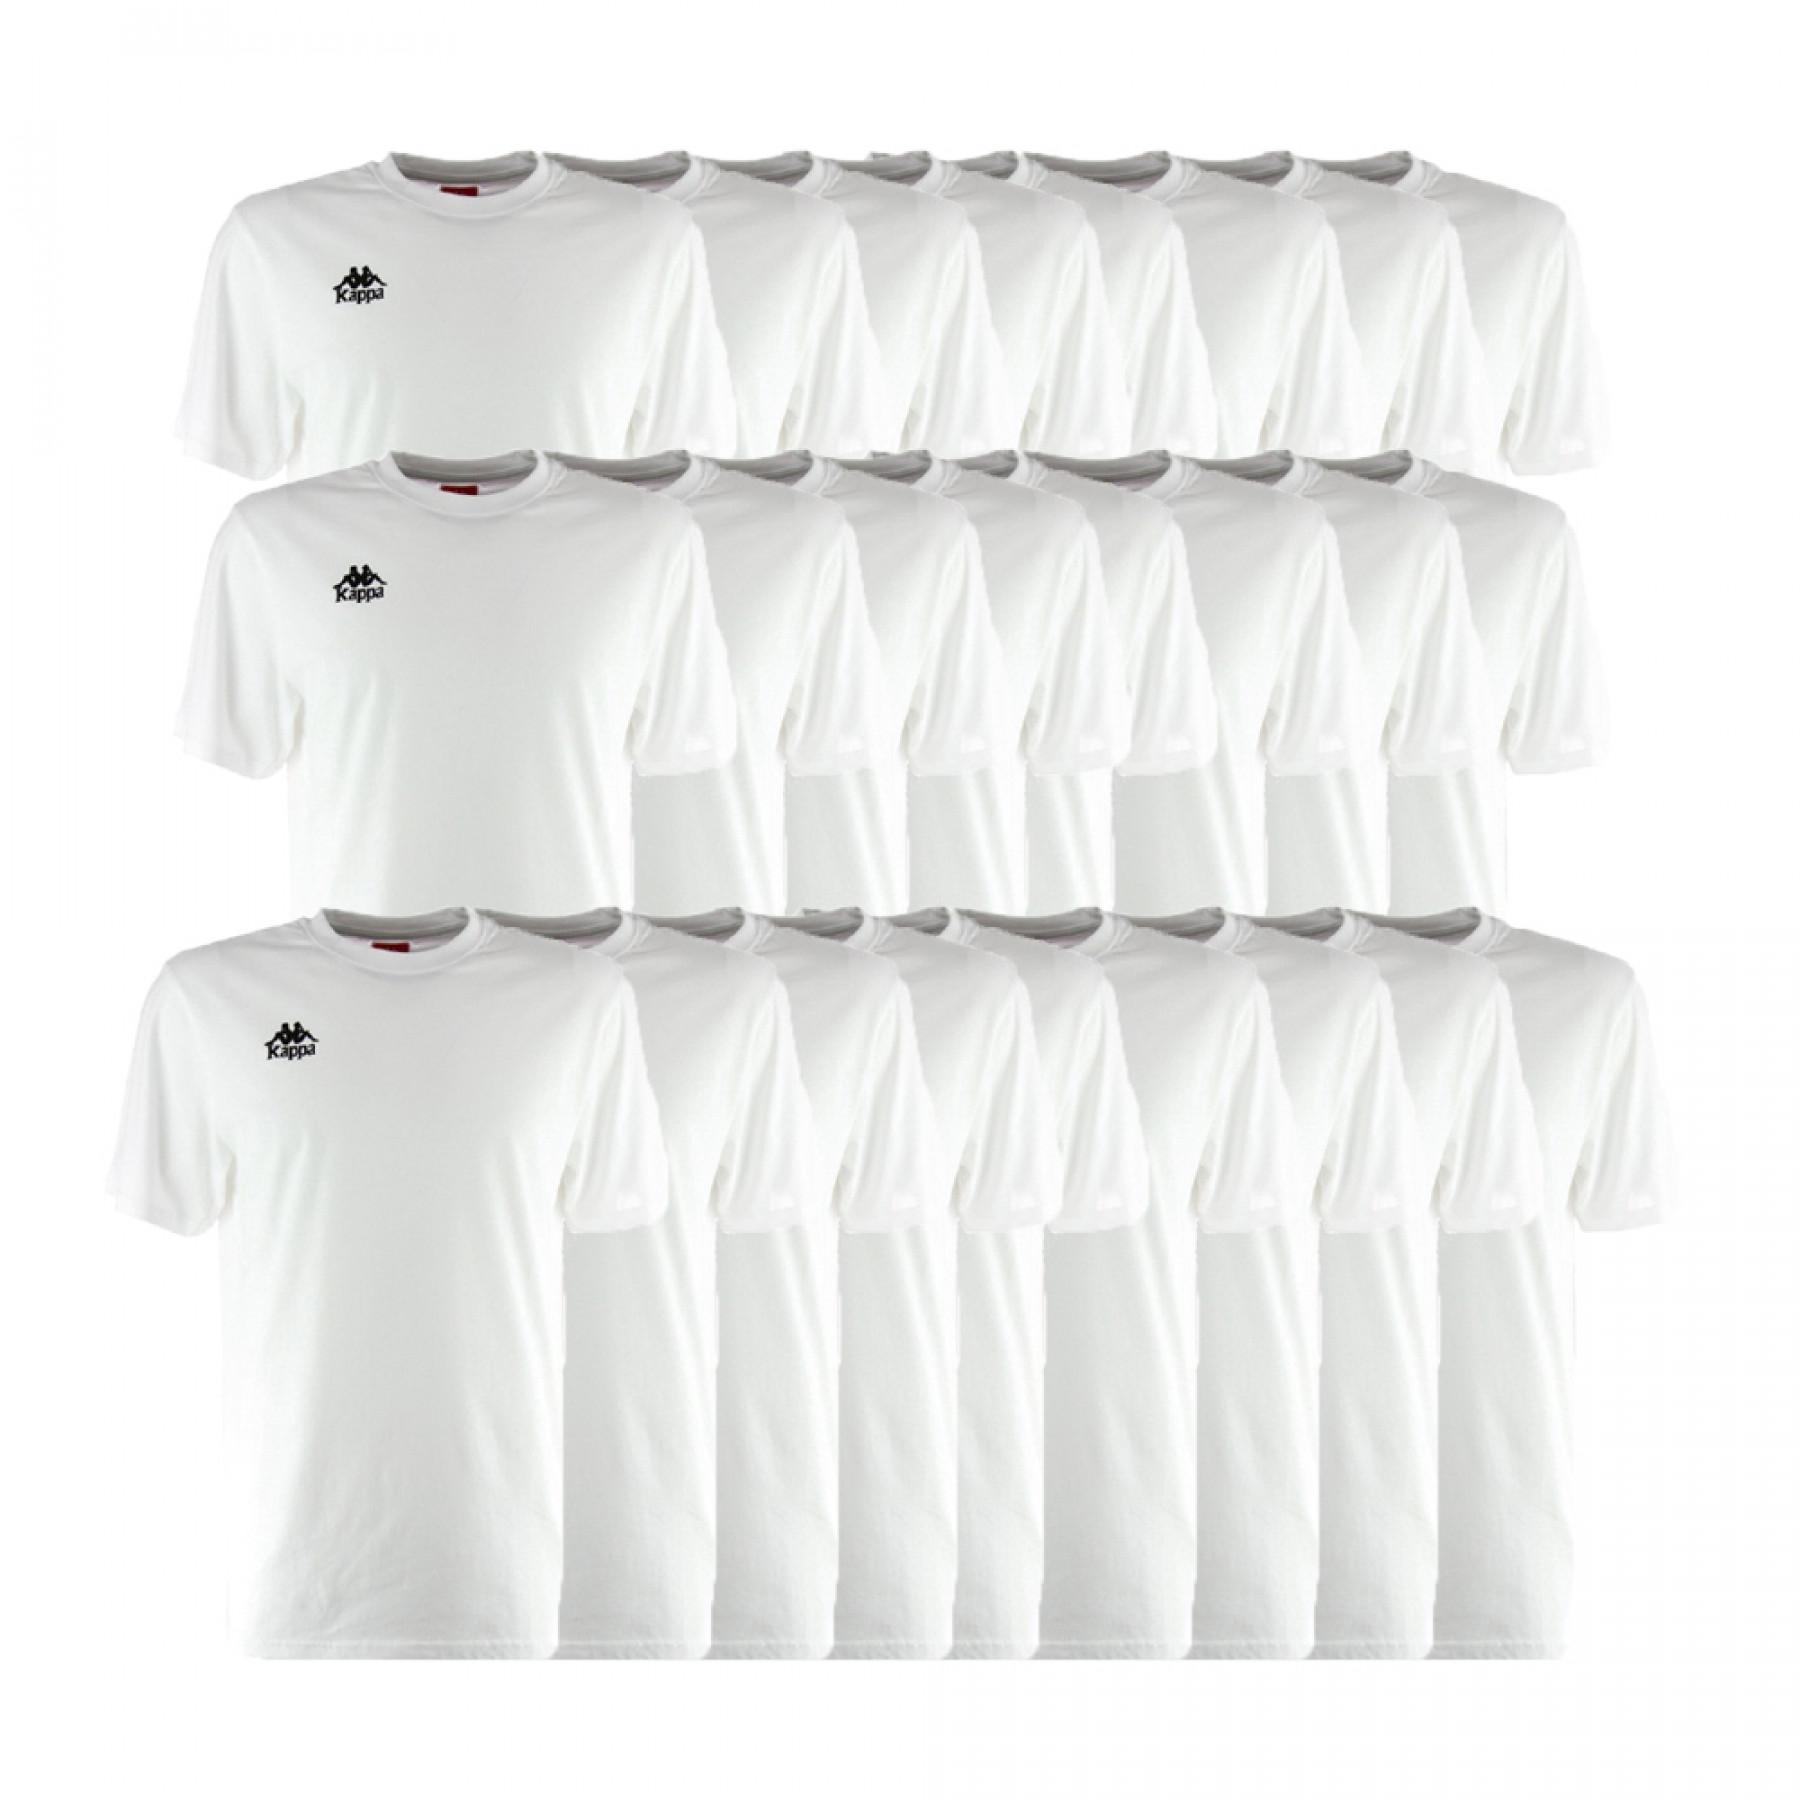 Packung mit 25 T-Shirts Kappa Picelo